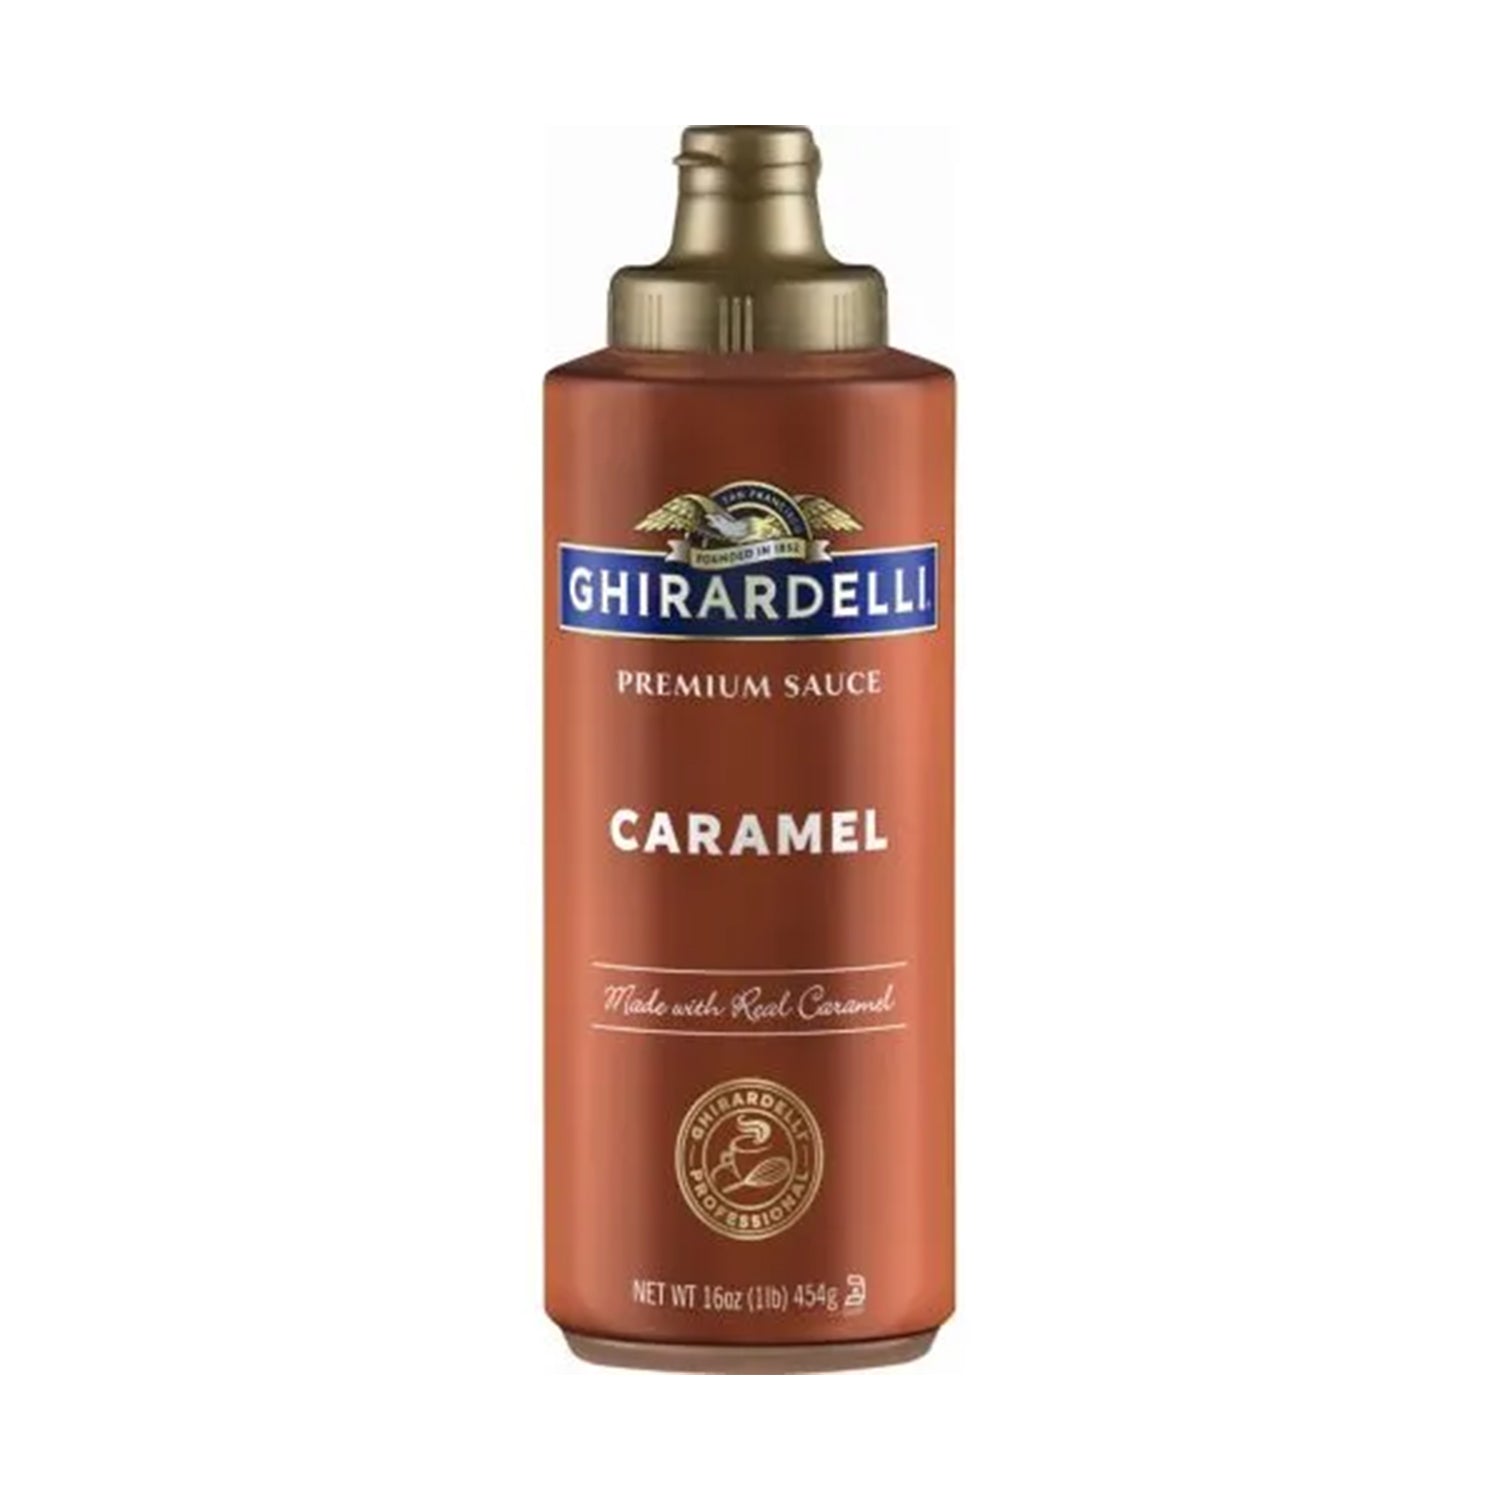 Ghirardelli Caramel Sauce in 16 fl oz squeeze bottle